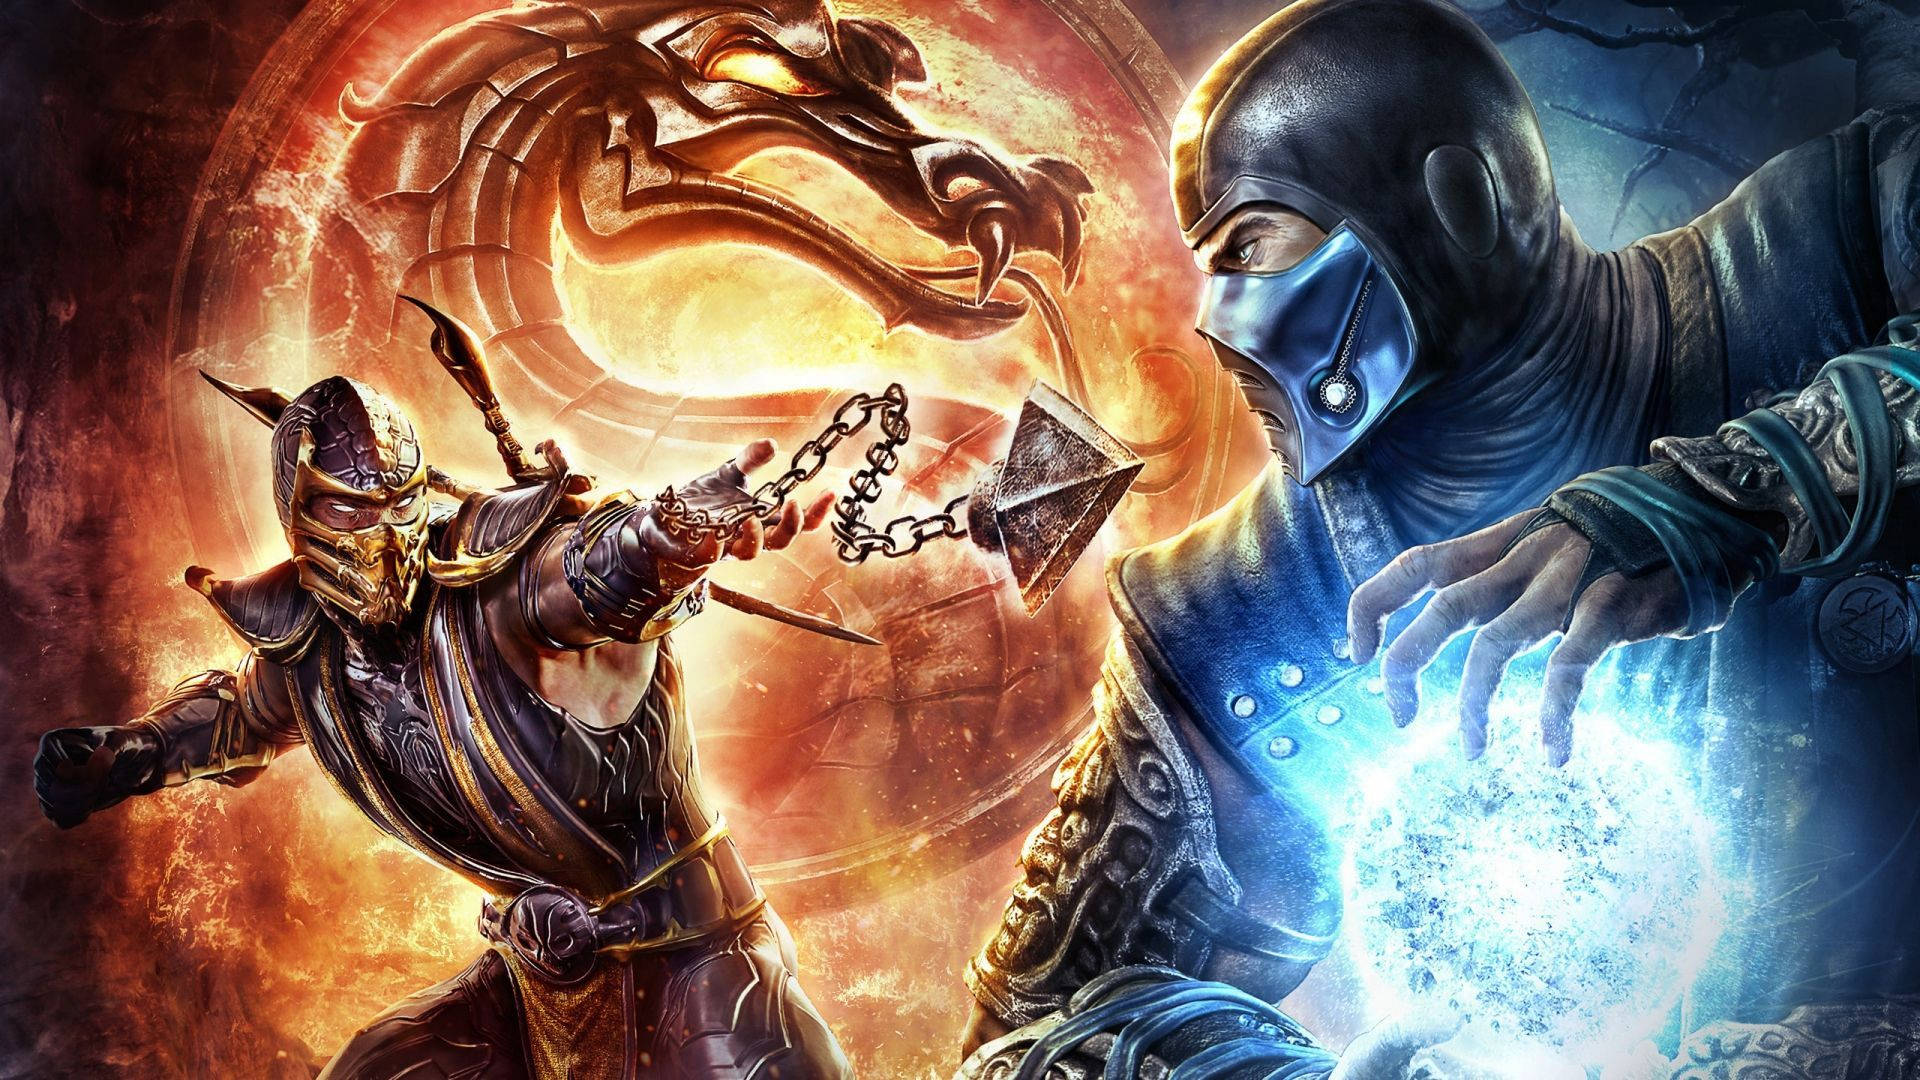 Mortal Kombat Scorpion Vs Sub Zero Battle